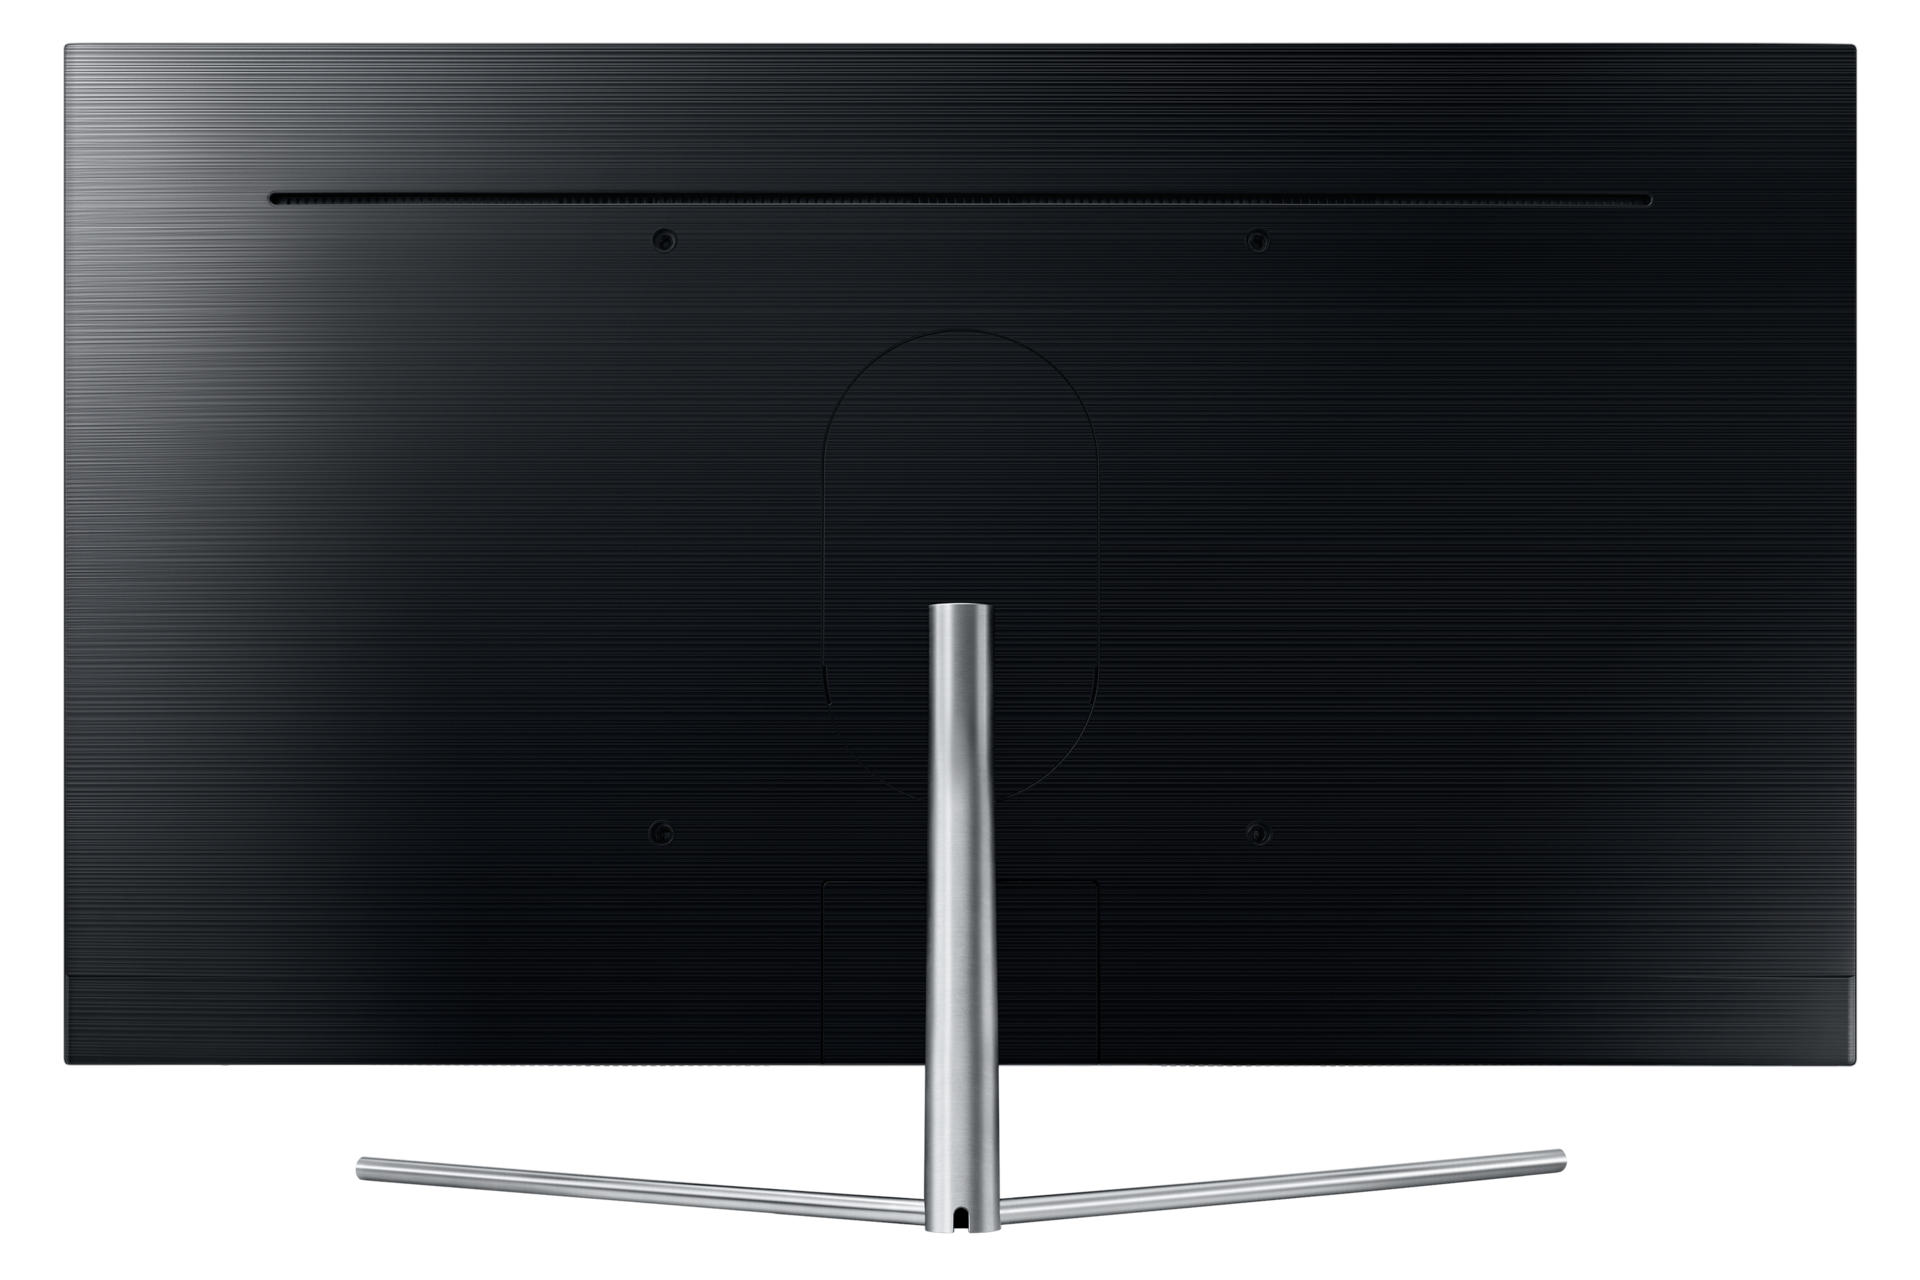 Samsung Series 7 Lcd Tv User Manual